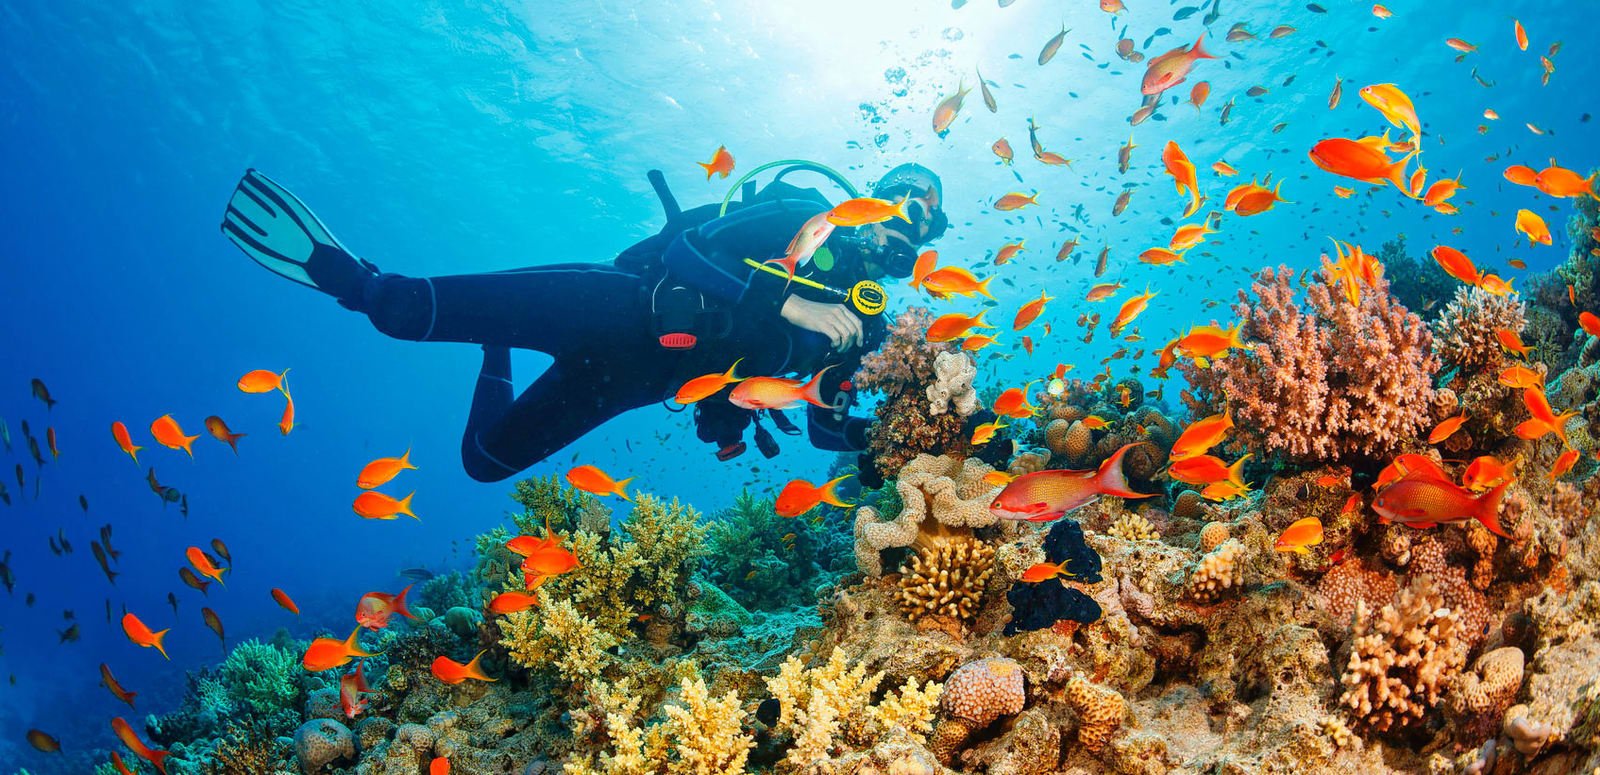 scuba diving near coral reef